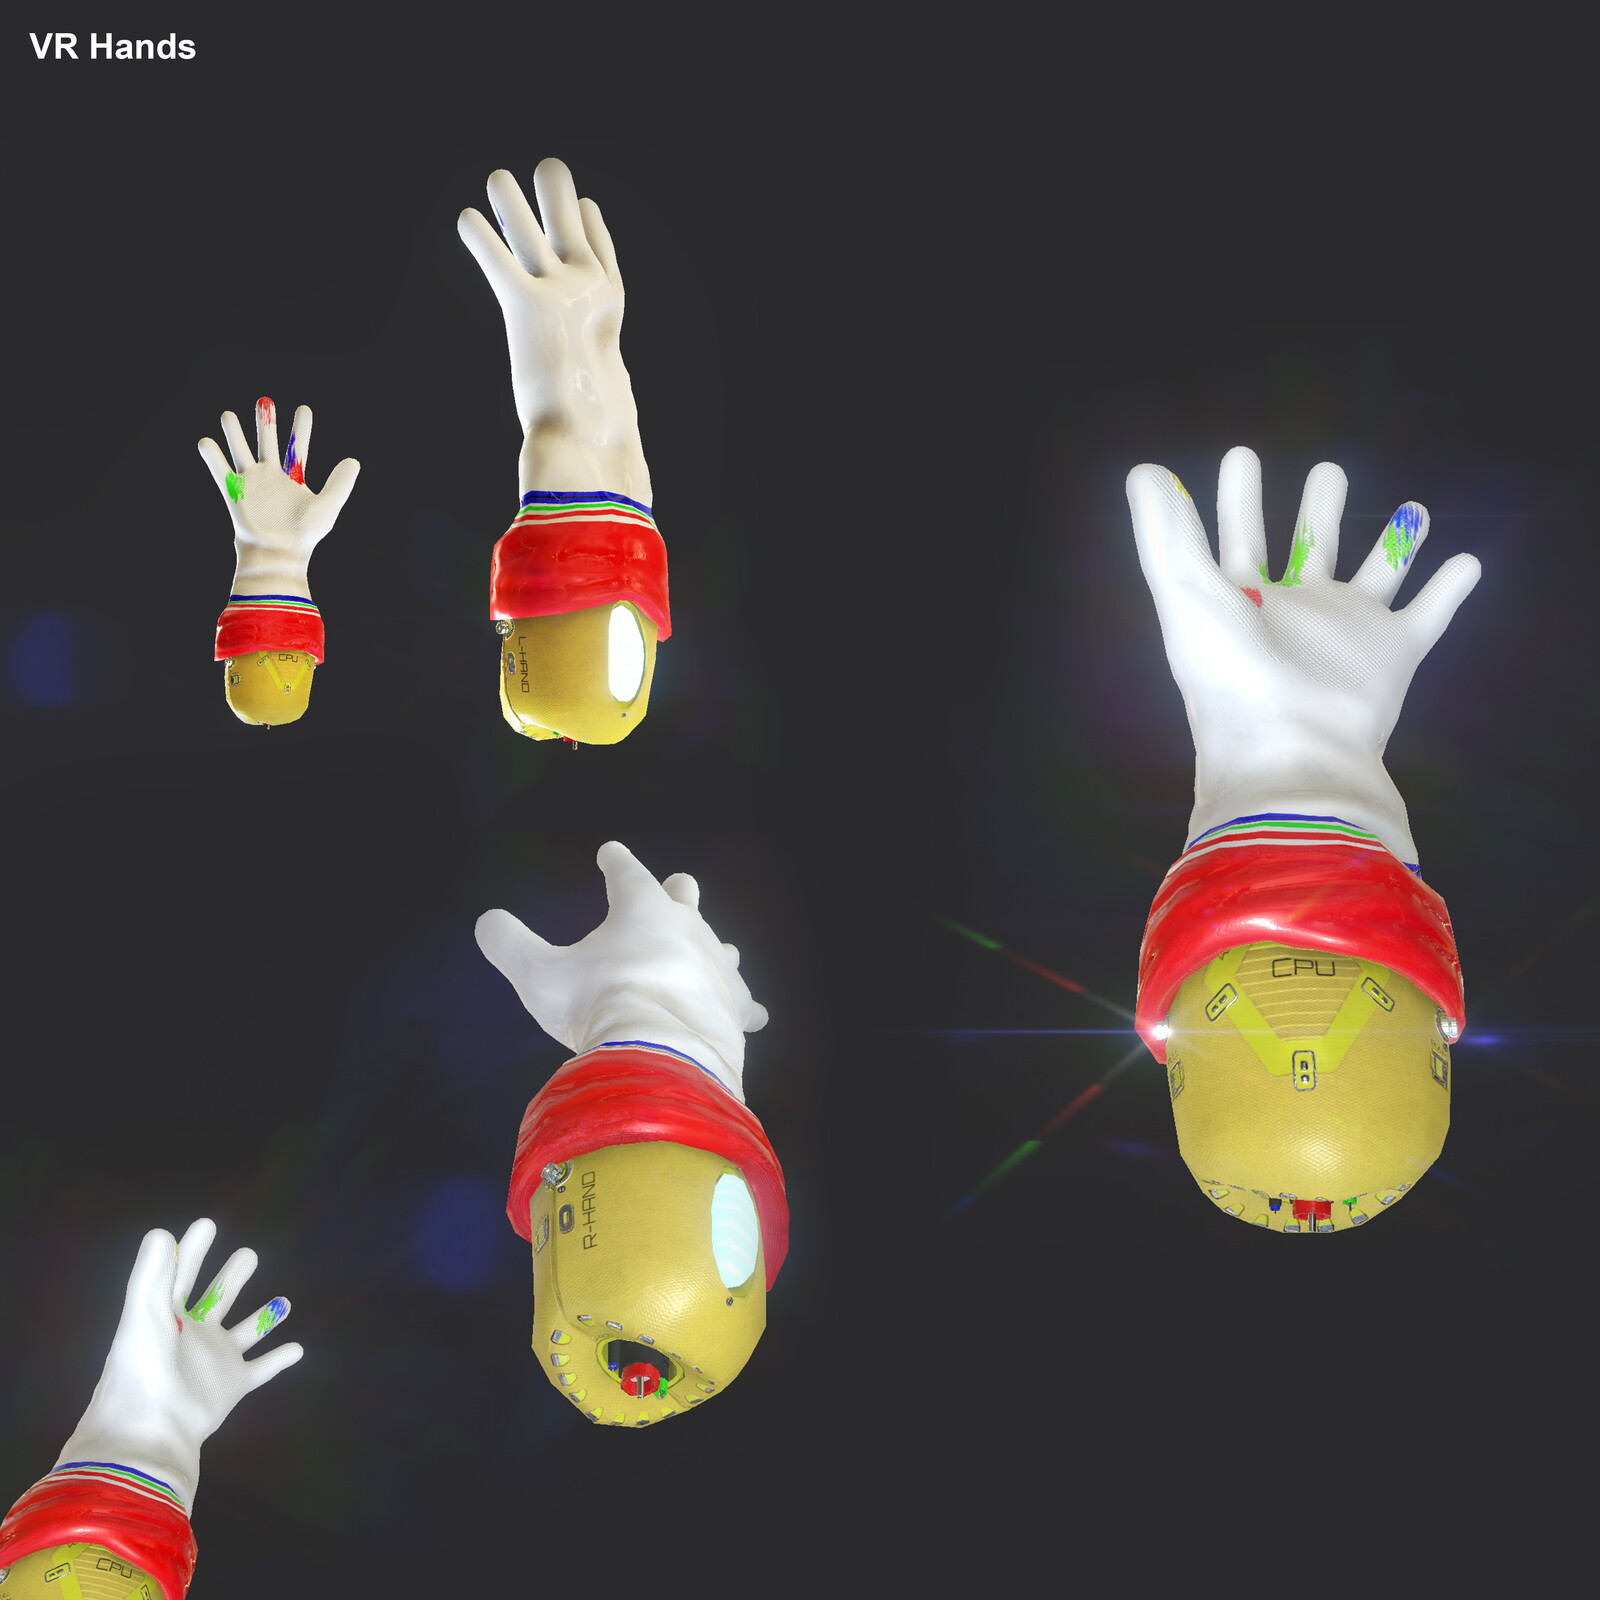 VR Hands concepts